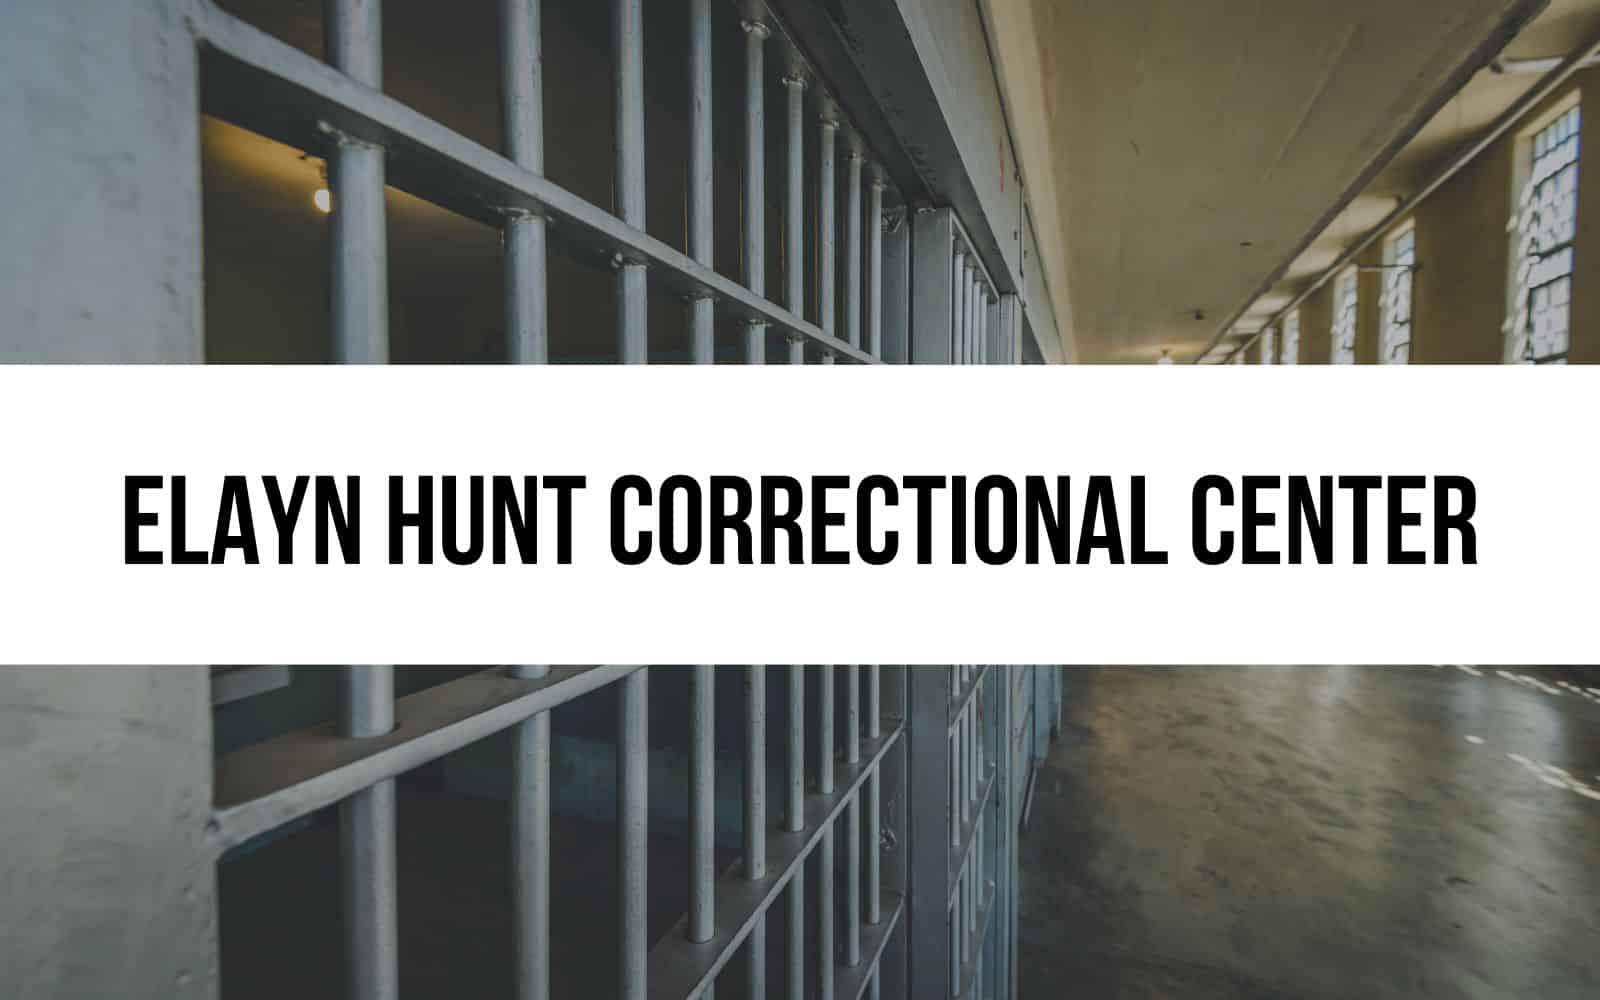 Elayn Hunt Correctional Center